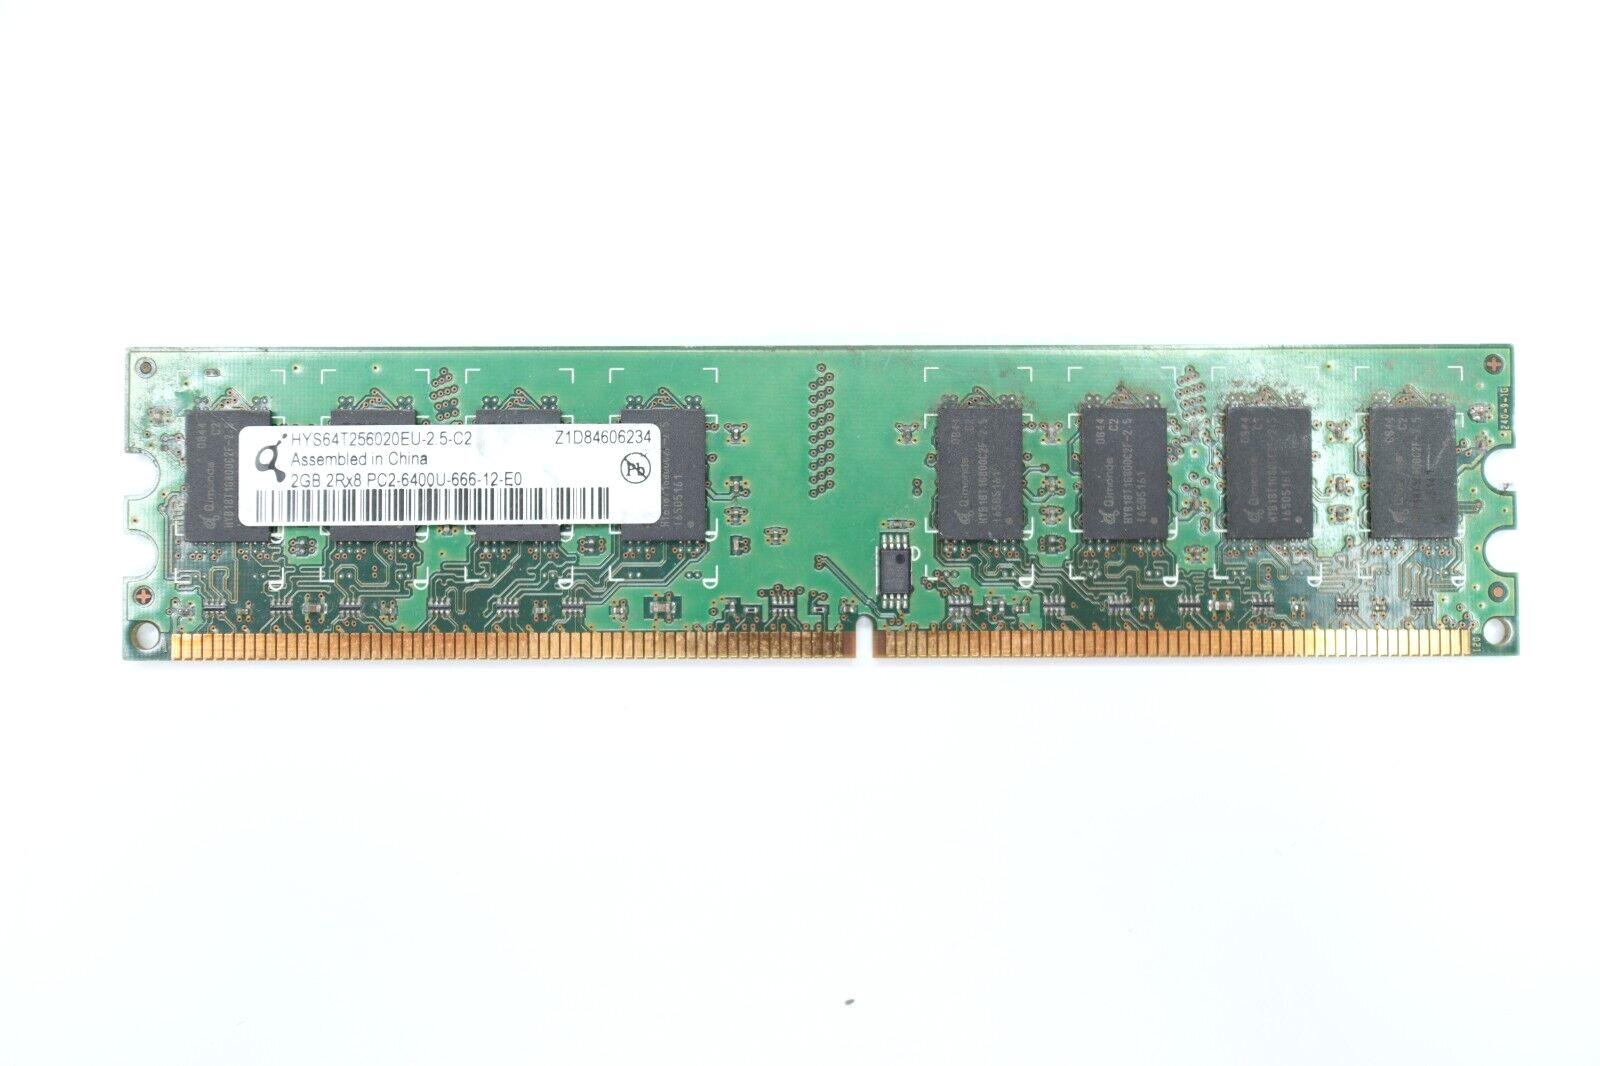 2GB DDR2-800 DIMM Qimonda HYS64T256020EU-2.5-C2 Equivalent Desktop Memory RAM